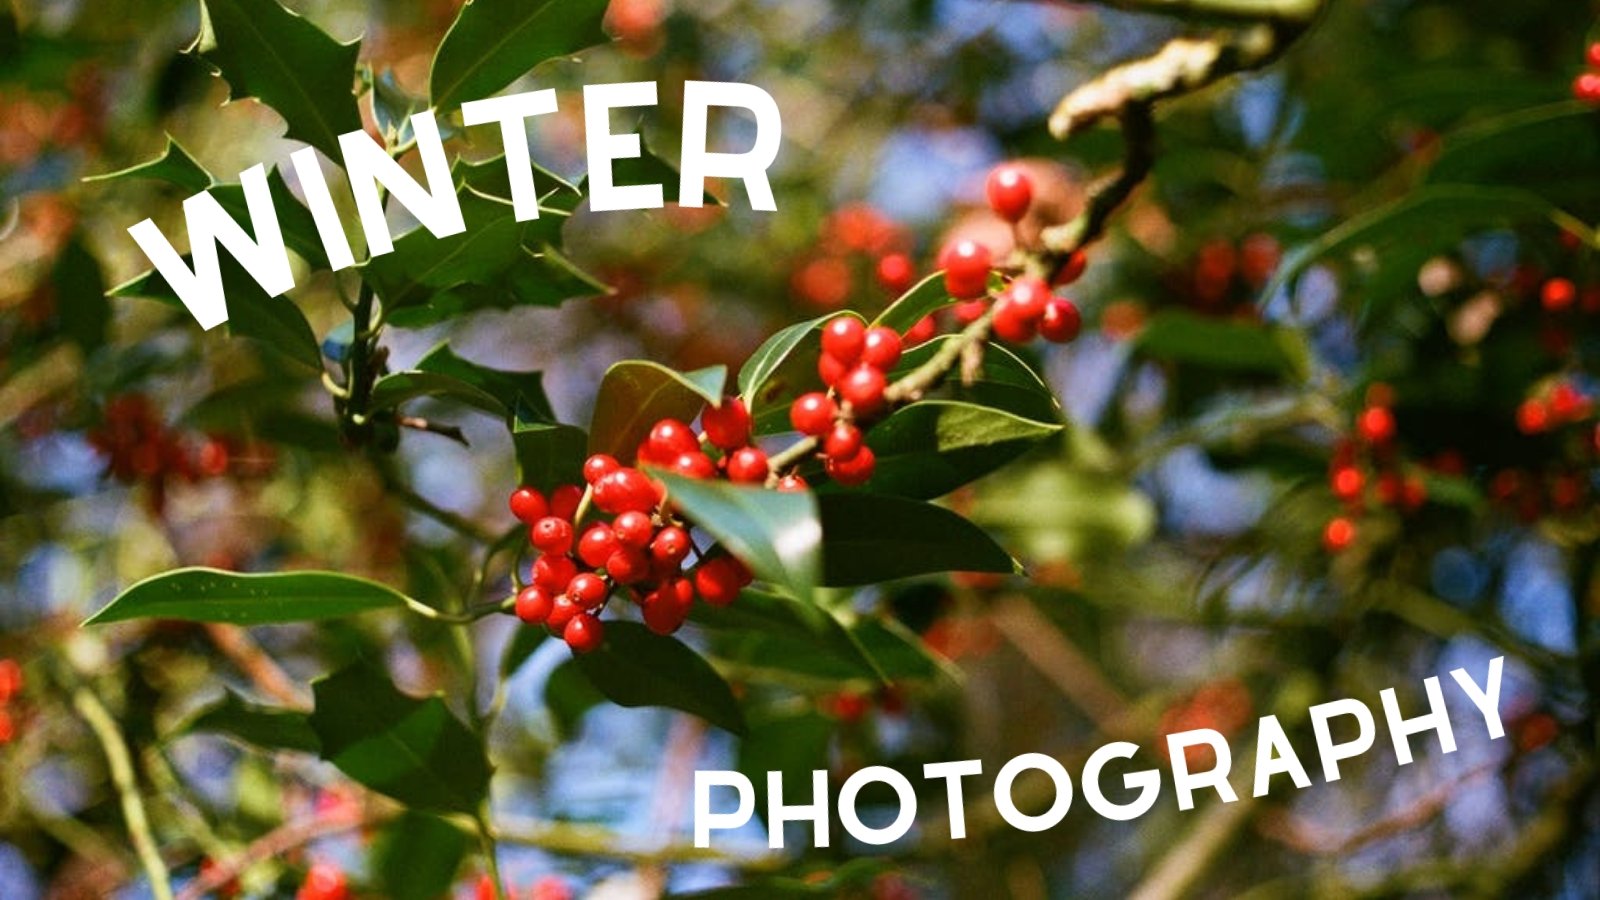 Winter Wonderland - A Film User’s Guide to Winter Photography - Analogue Wonderland